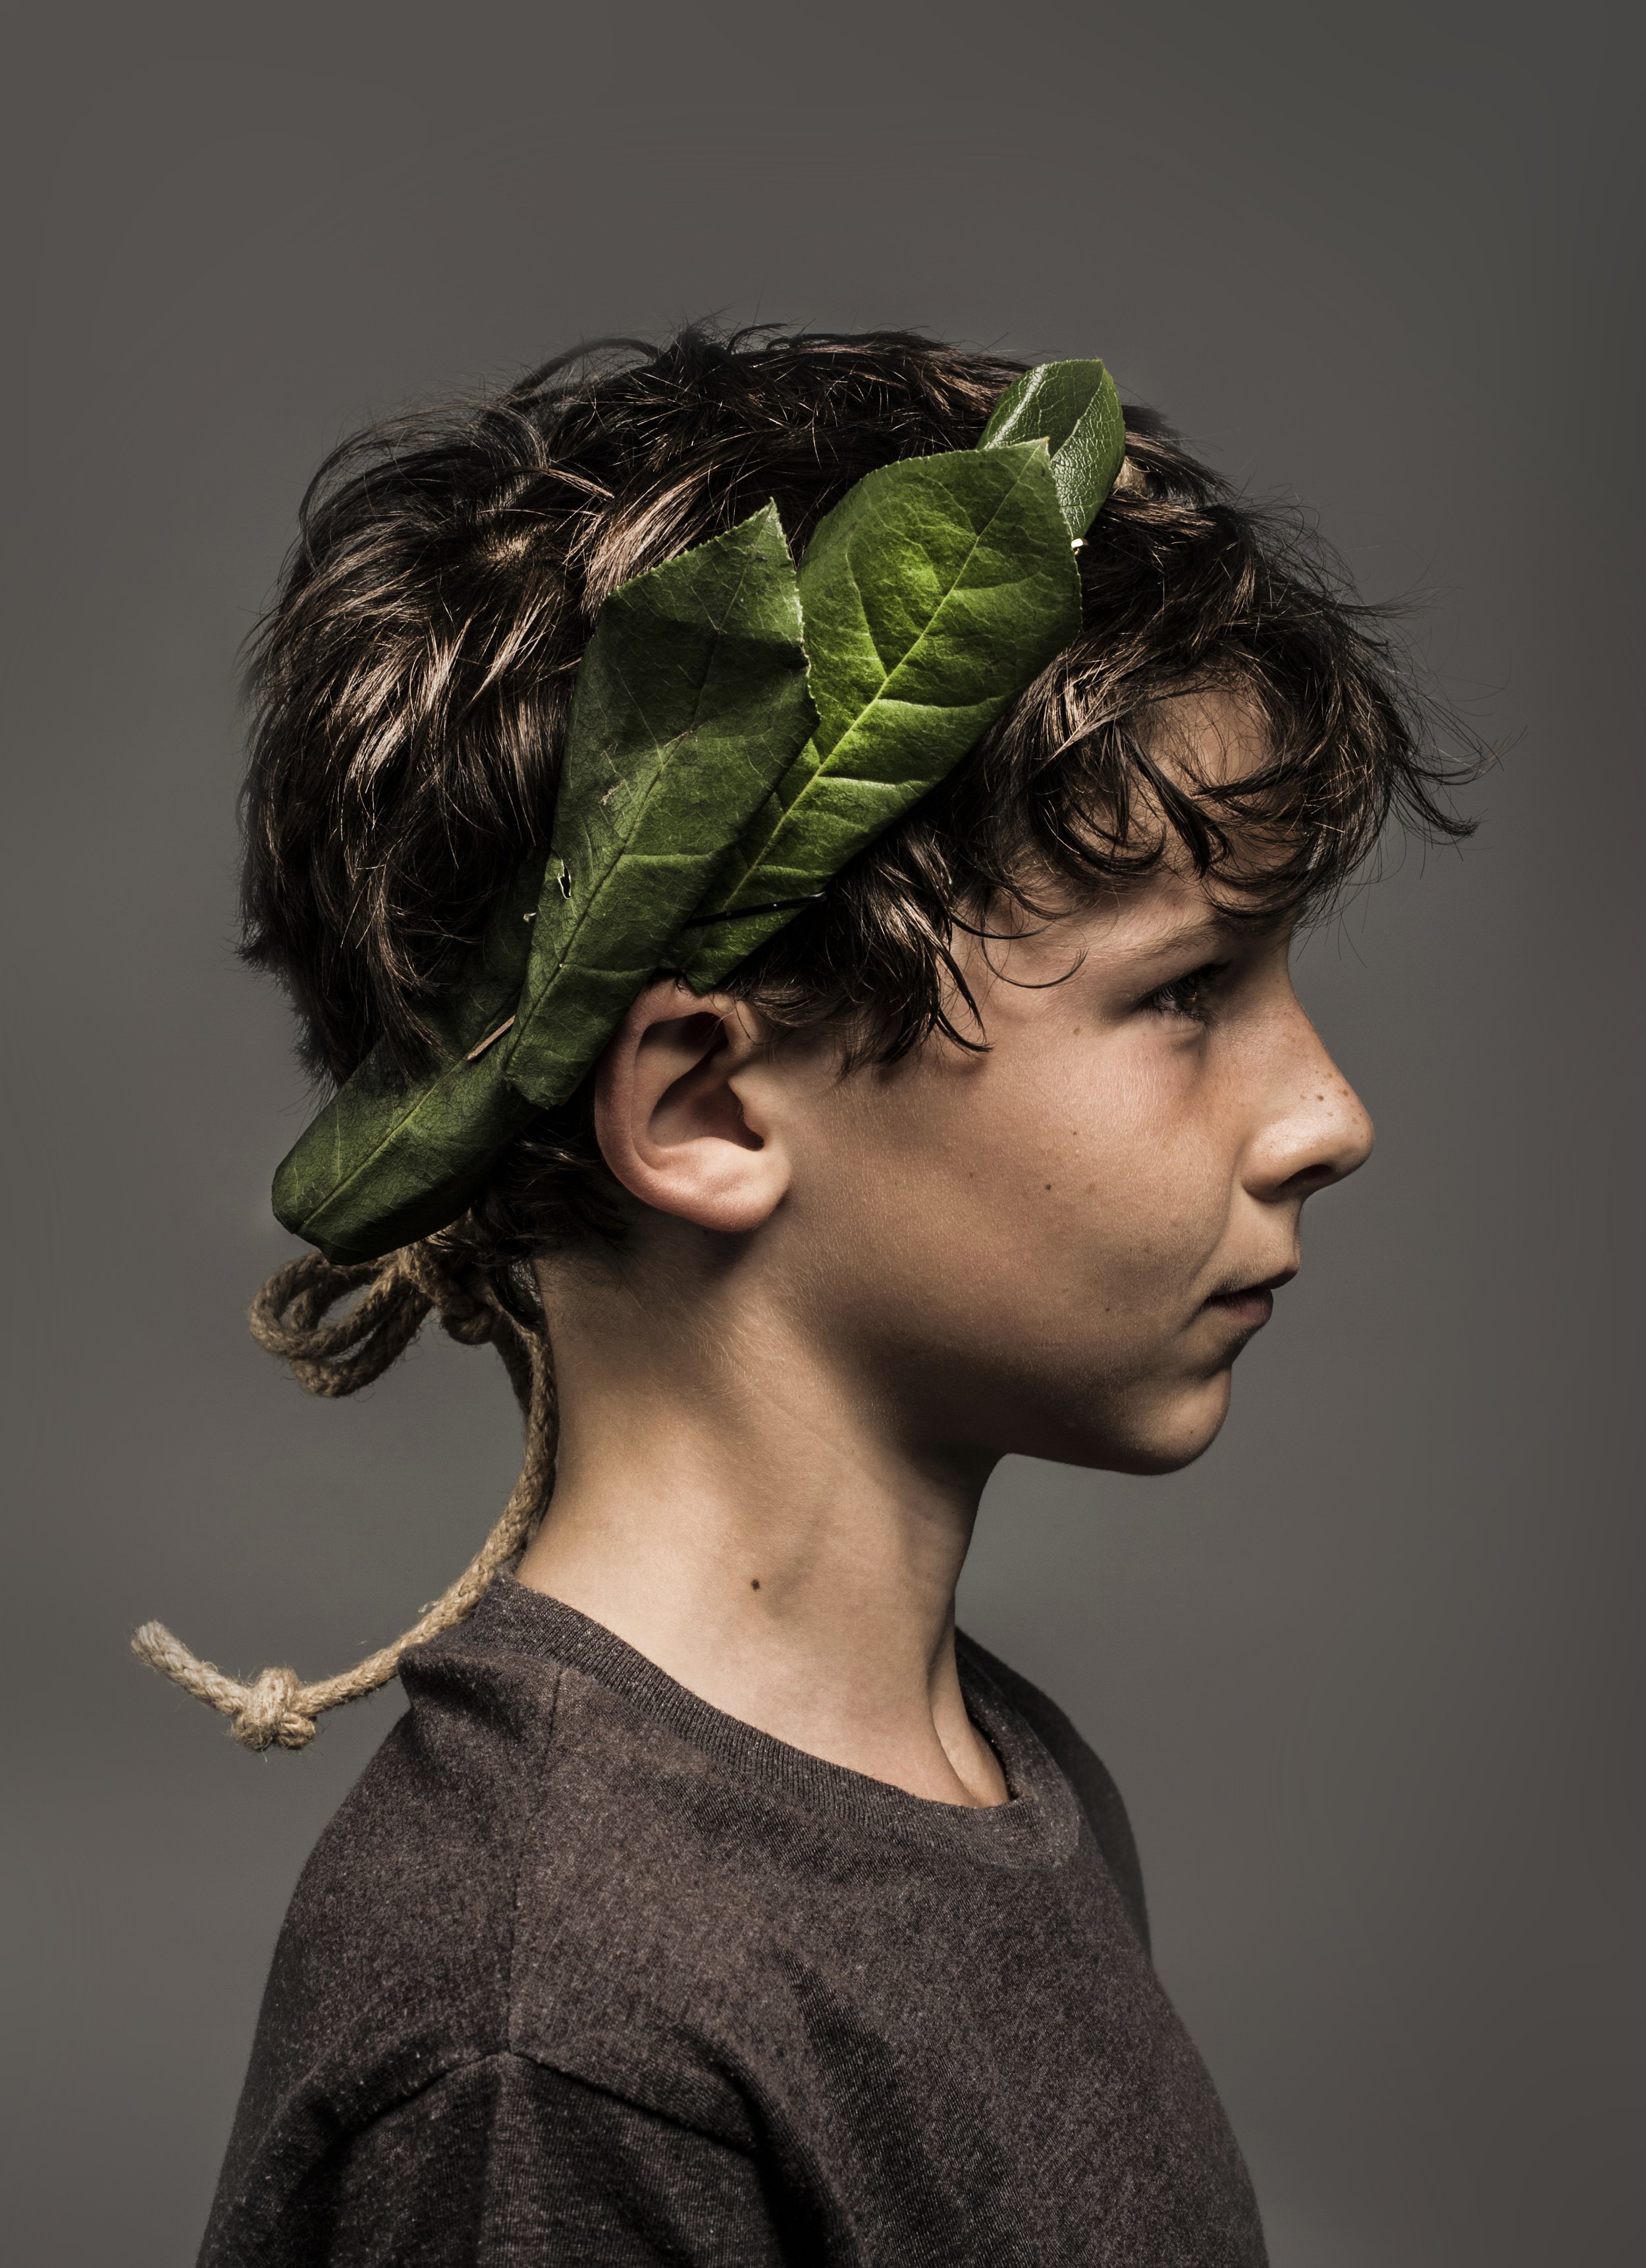 Young boy with dark hair wearing leaf crown